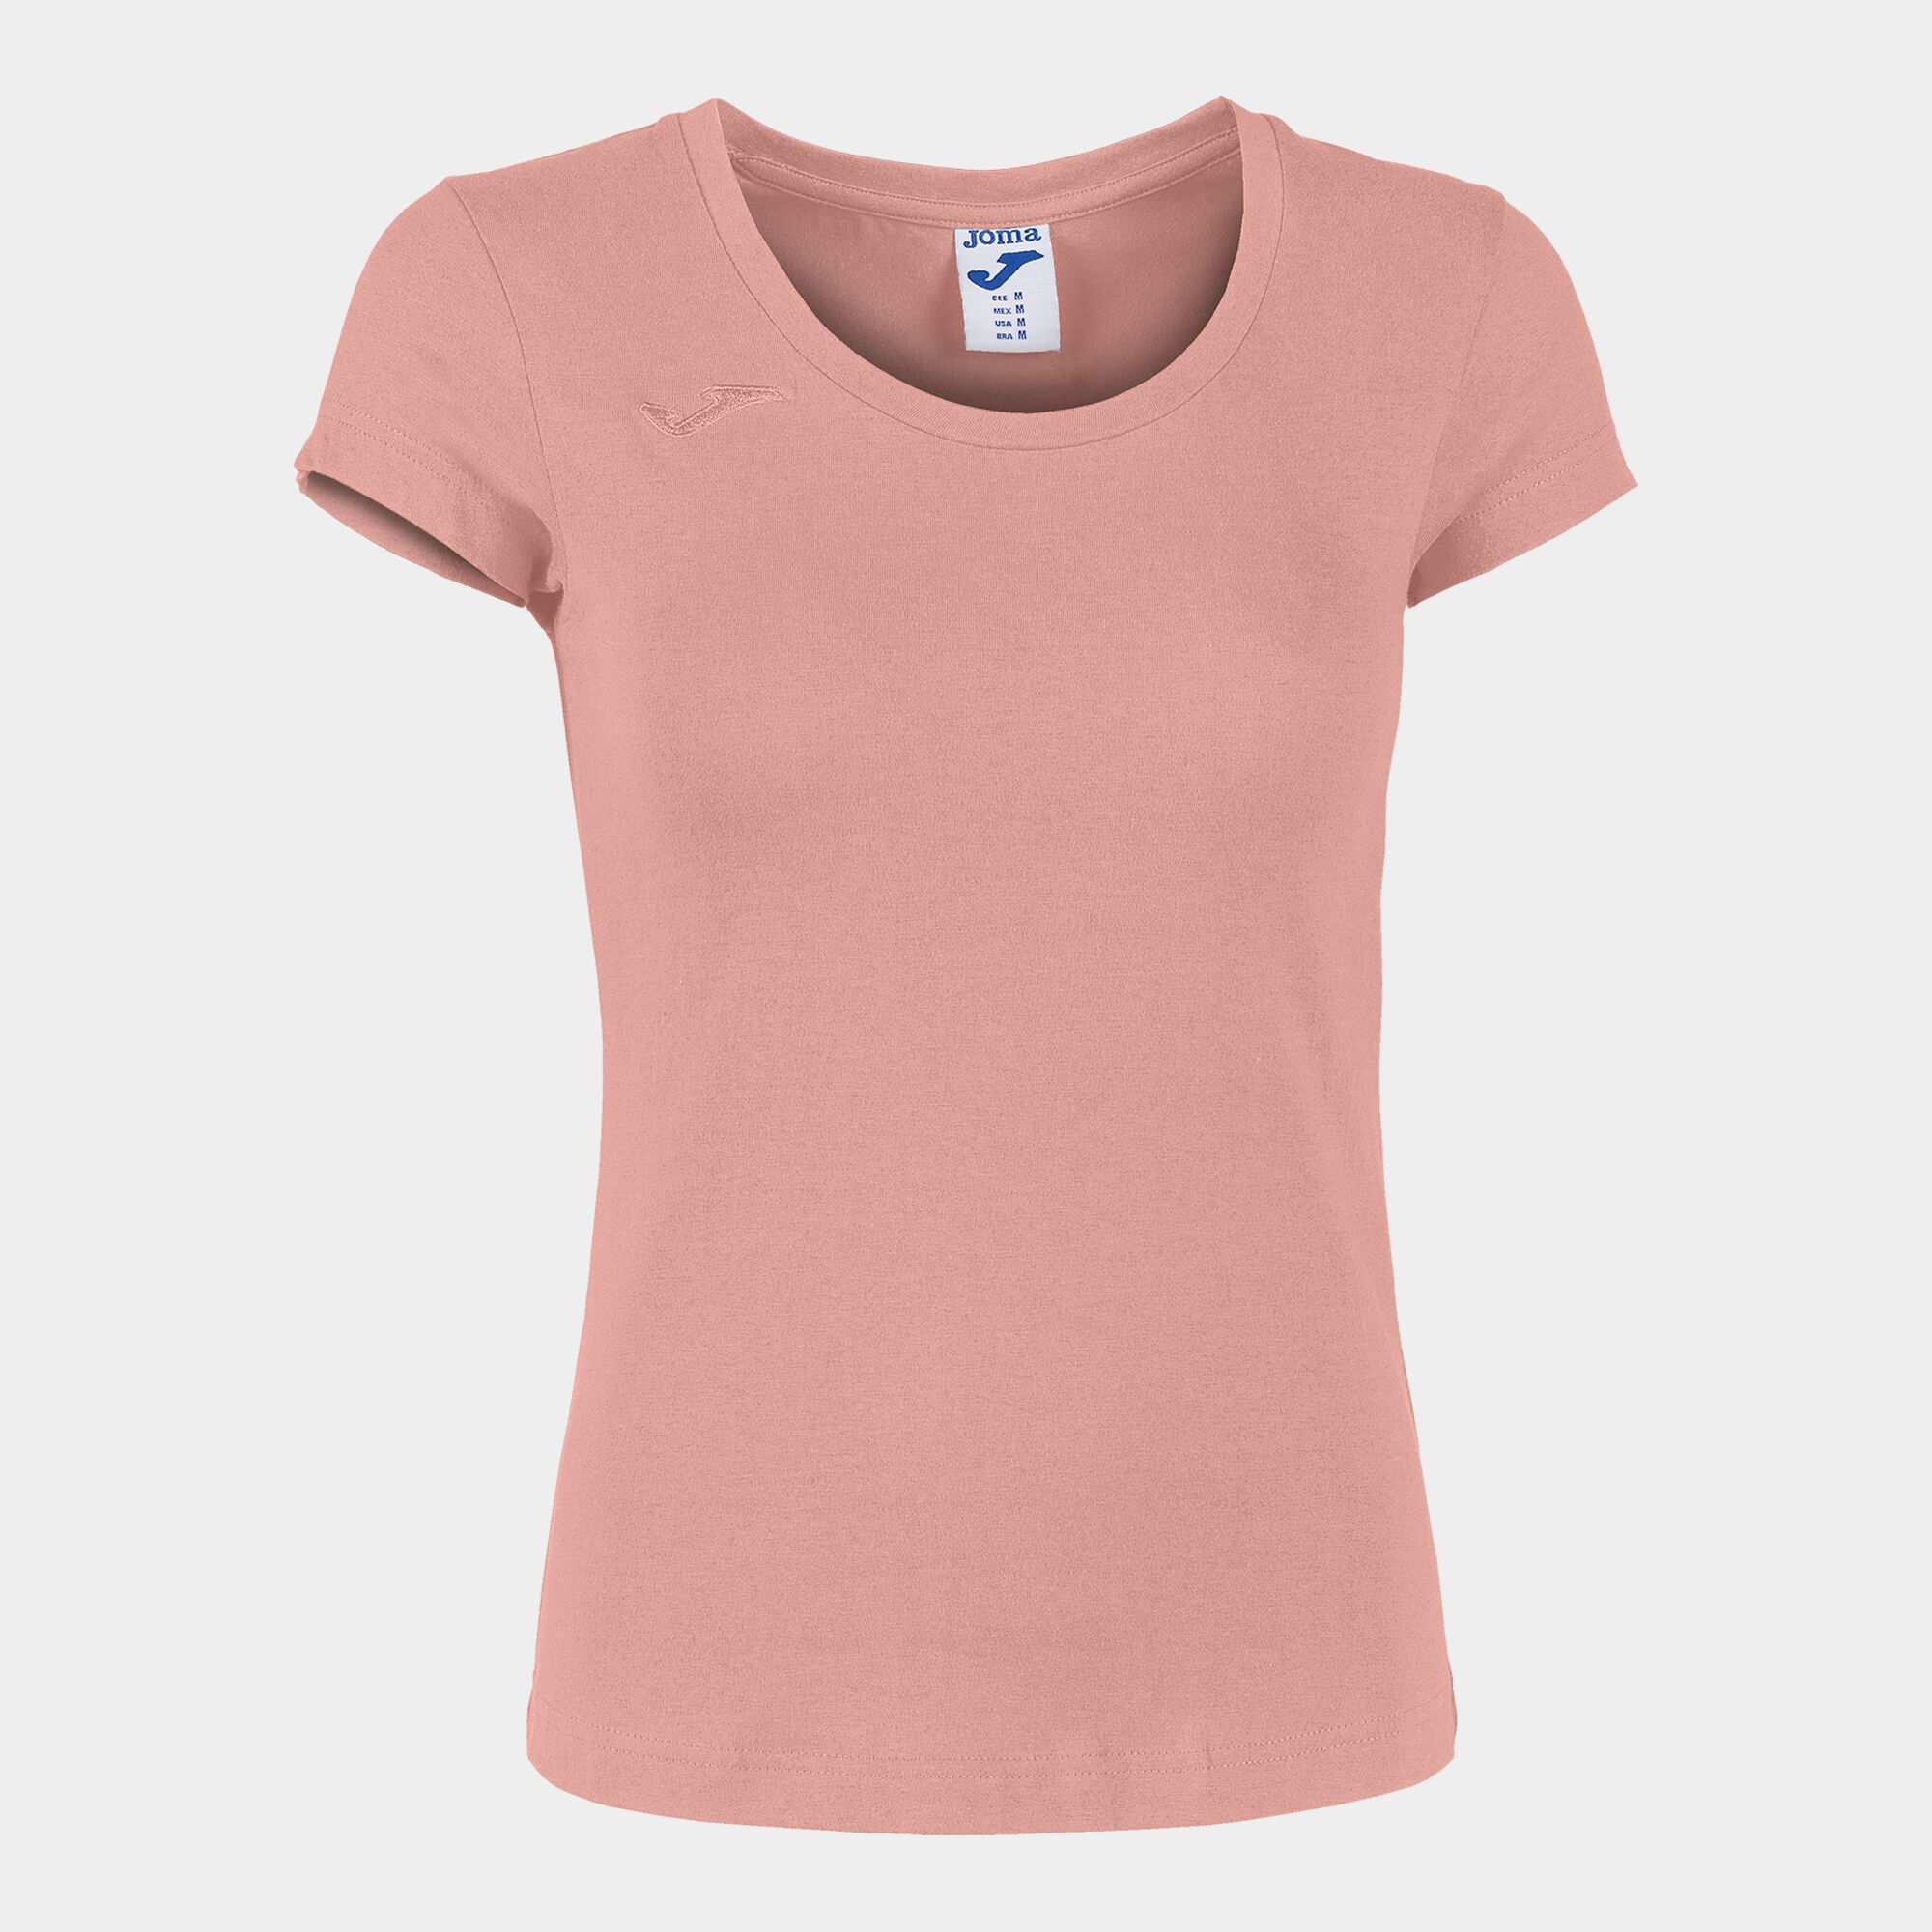 Camiseta manga corta mujer Verona rosa